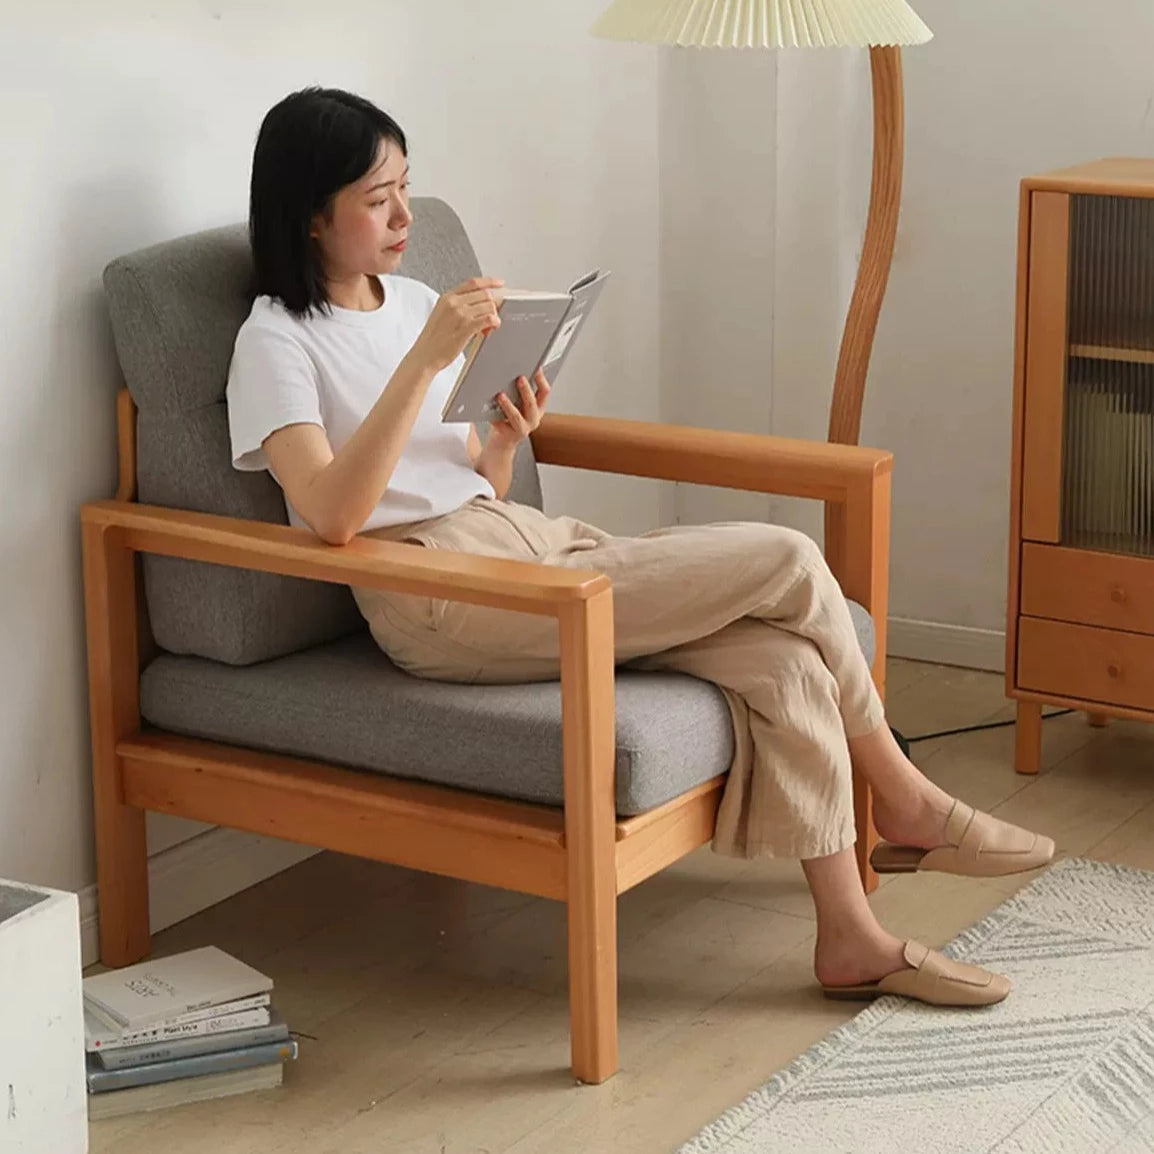 Beech solid wood armchair modern minimalist "